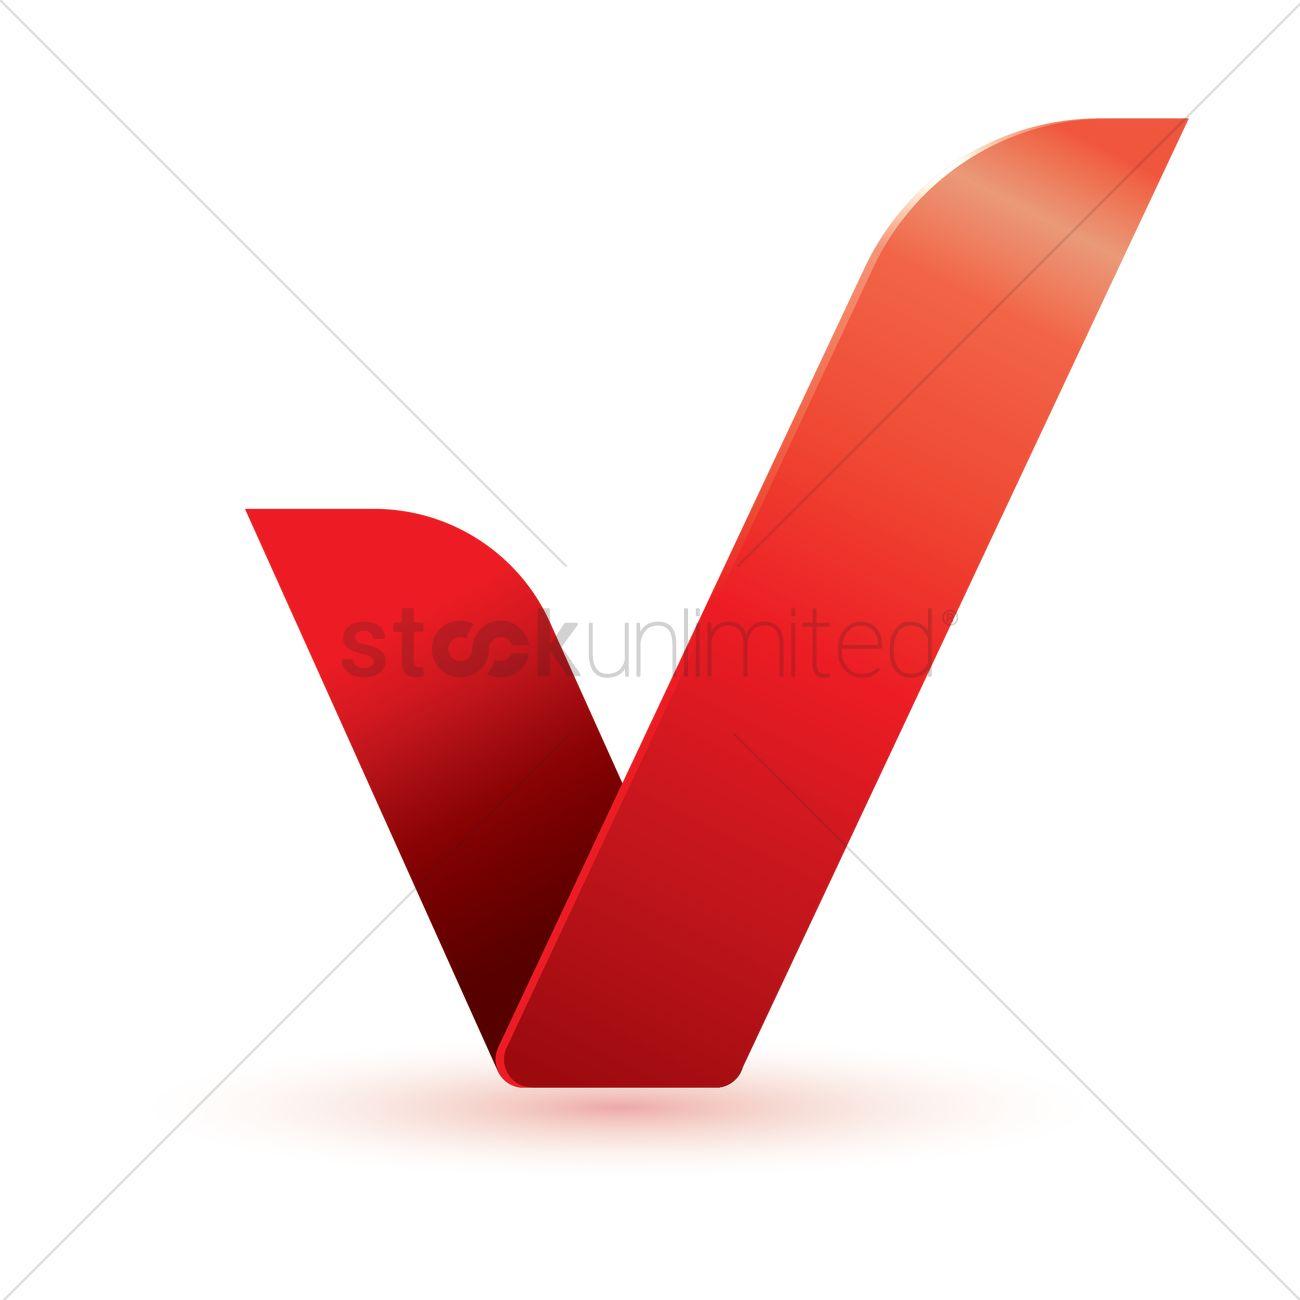 Checkmark Logo - Checkmark logo element Vector Image - 1823428 | StockUnlimited